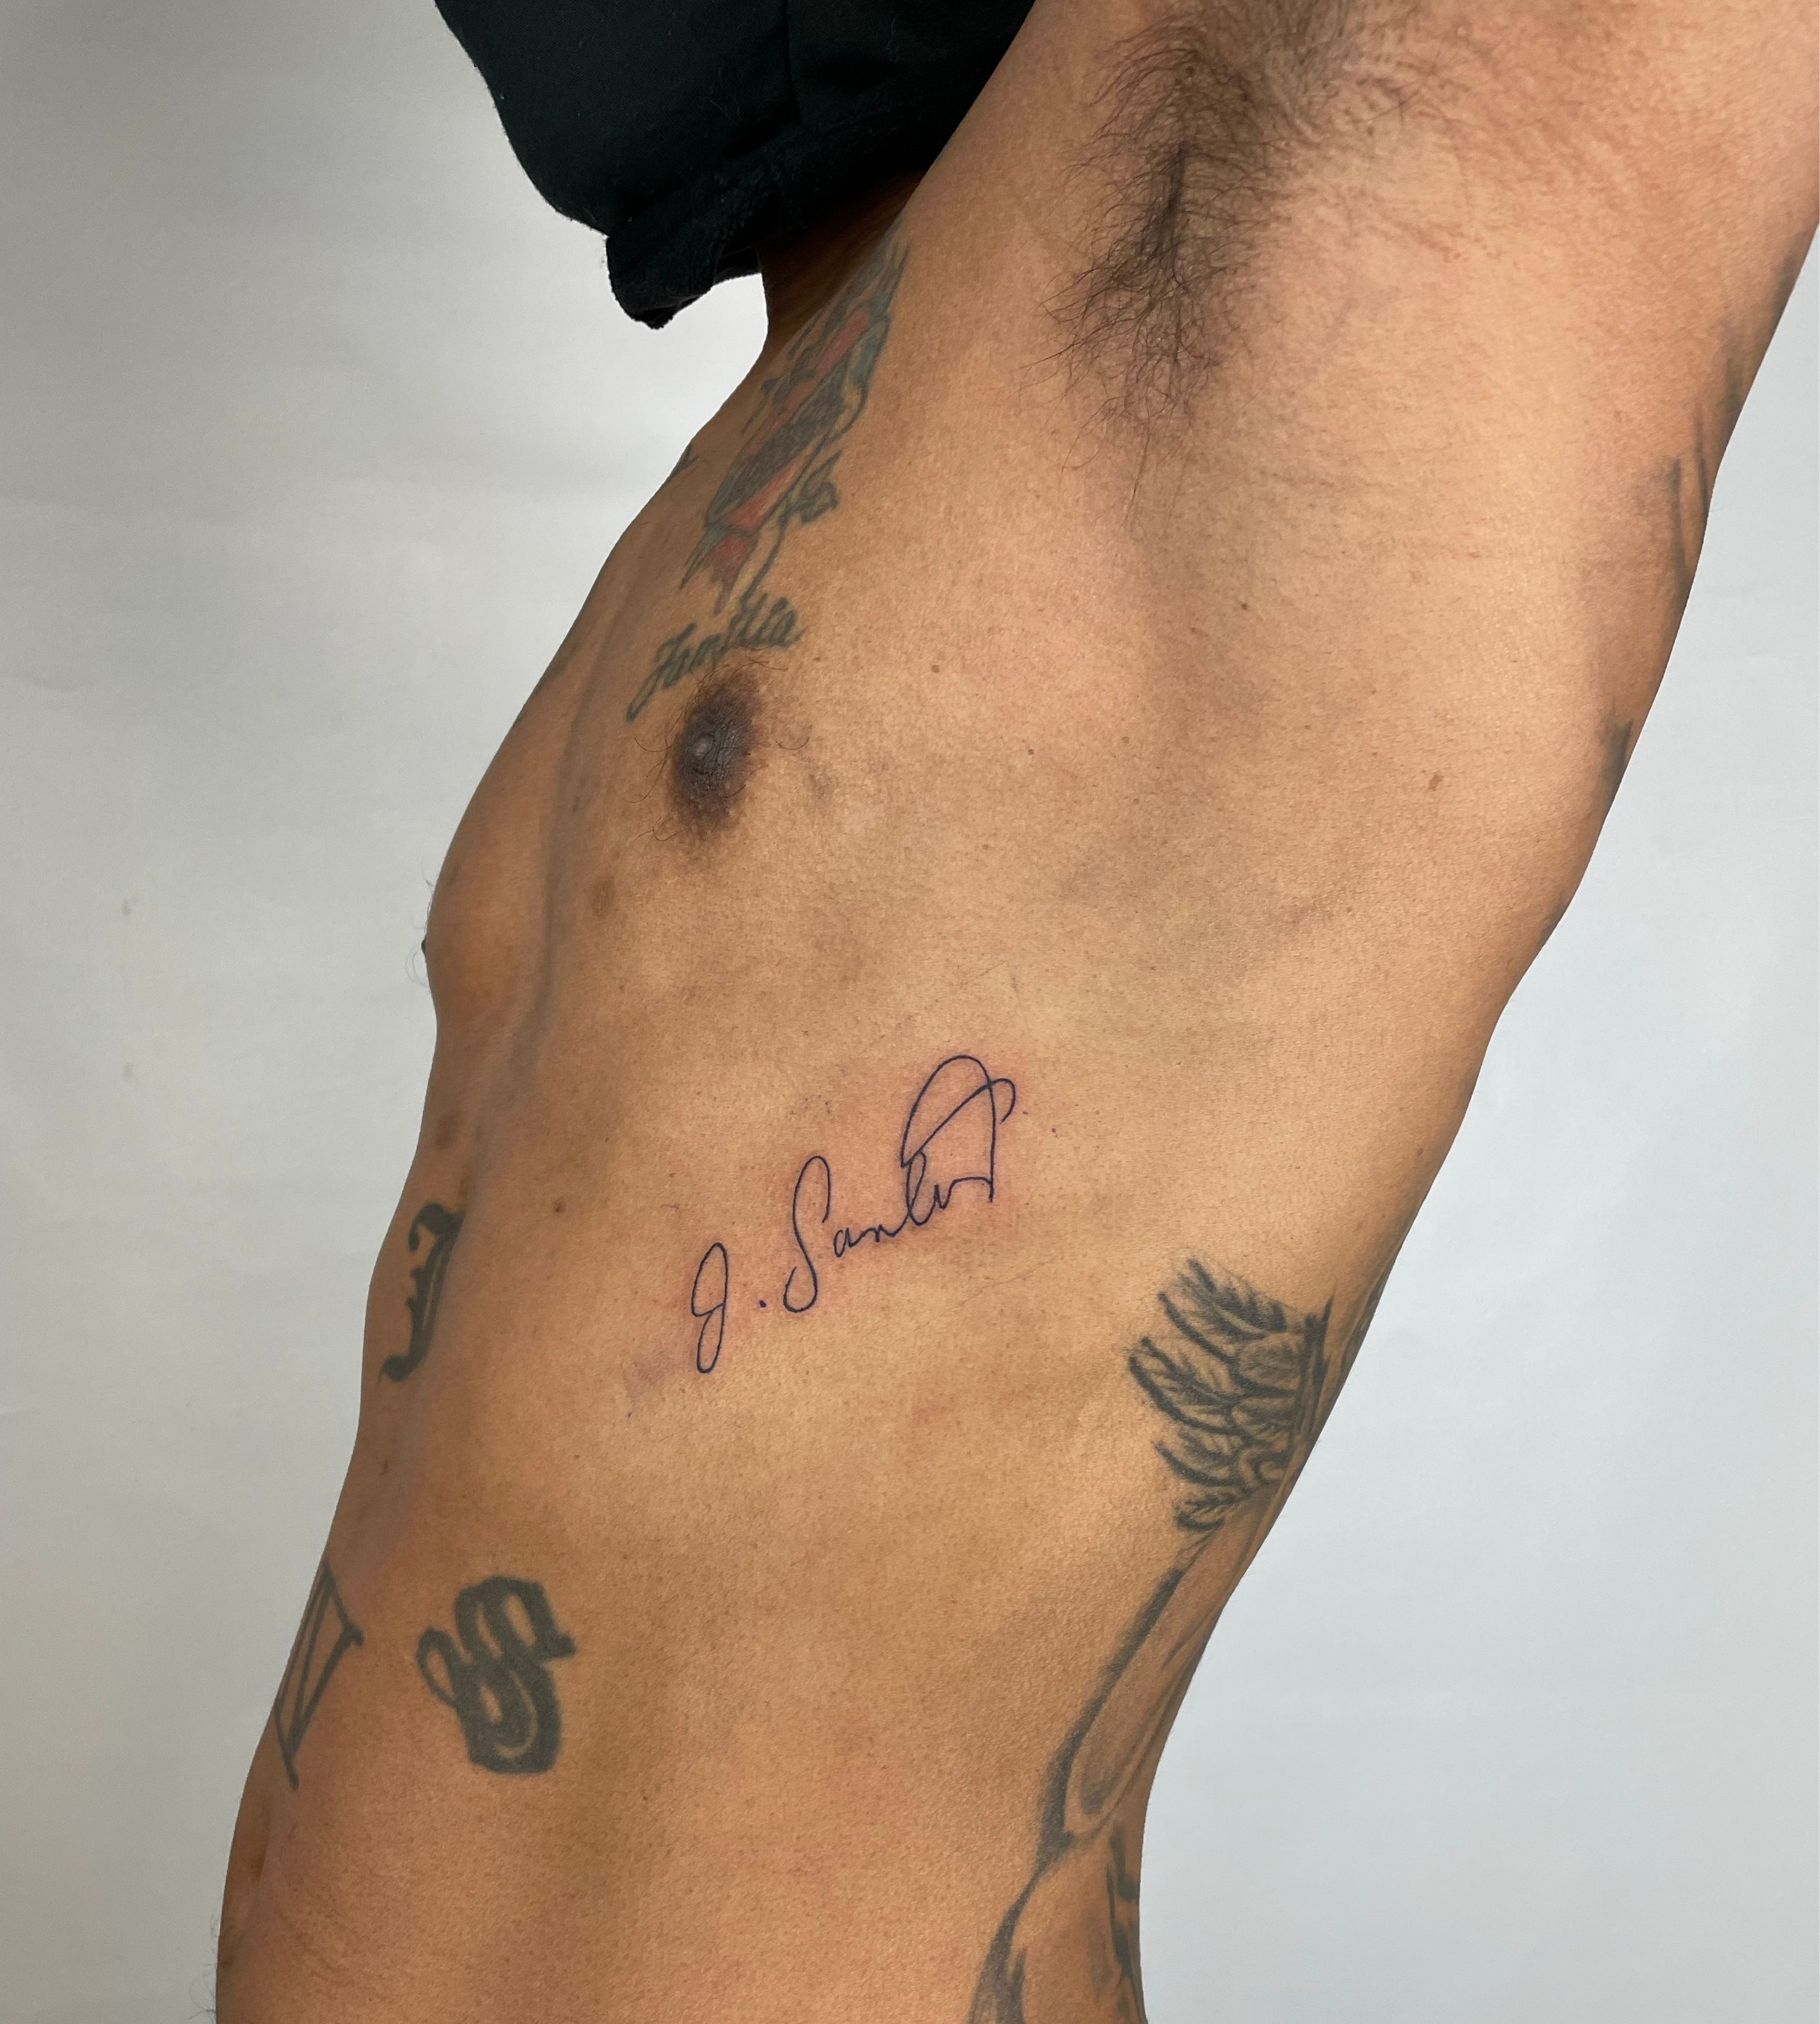 Written in the Stars | Signature Tattoo Ideas | POPSUGAR Beauty Photo 2 |  Small tattoos, Signature tattoos, Tattoo designs and meanings